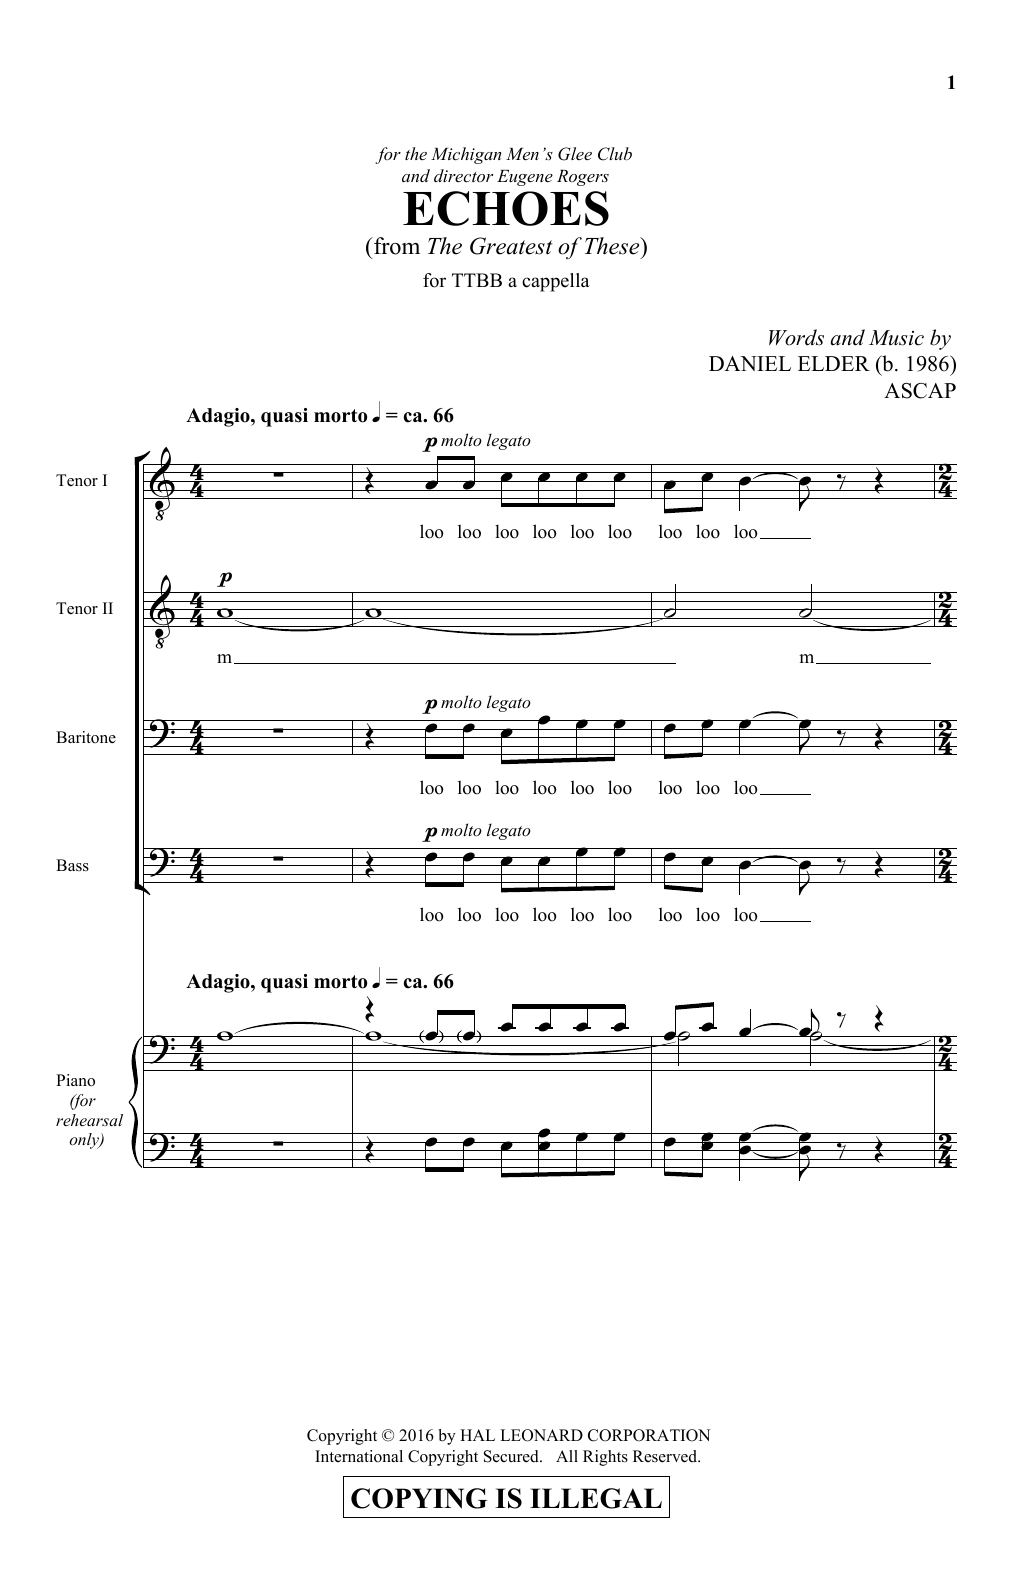 Daniel Elder Echoes Sheet Music Notes & Chords for TTBB - Download or Print PDF